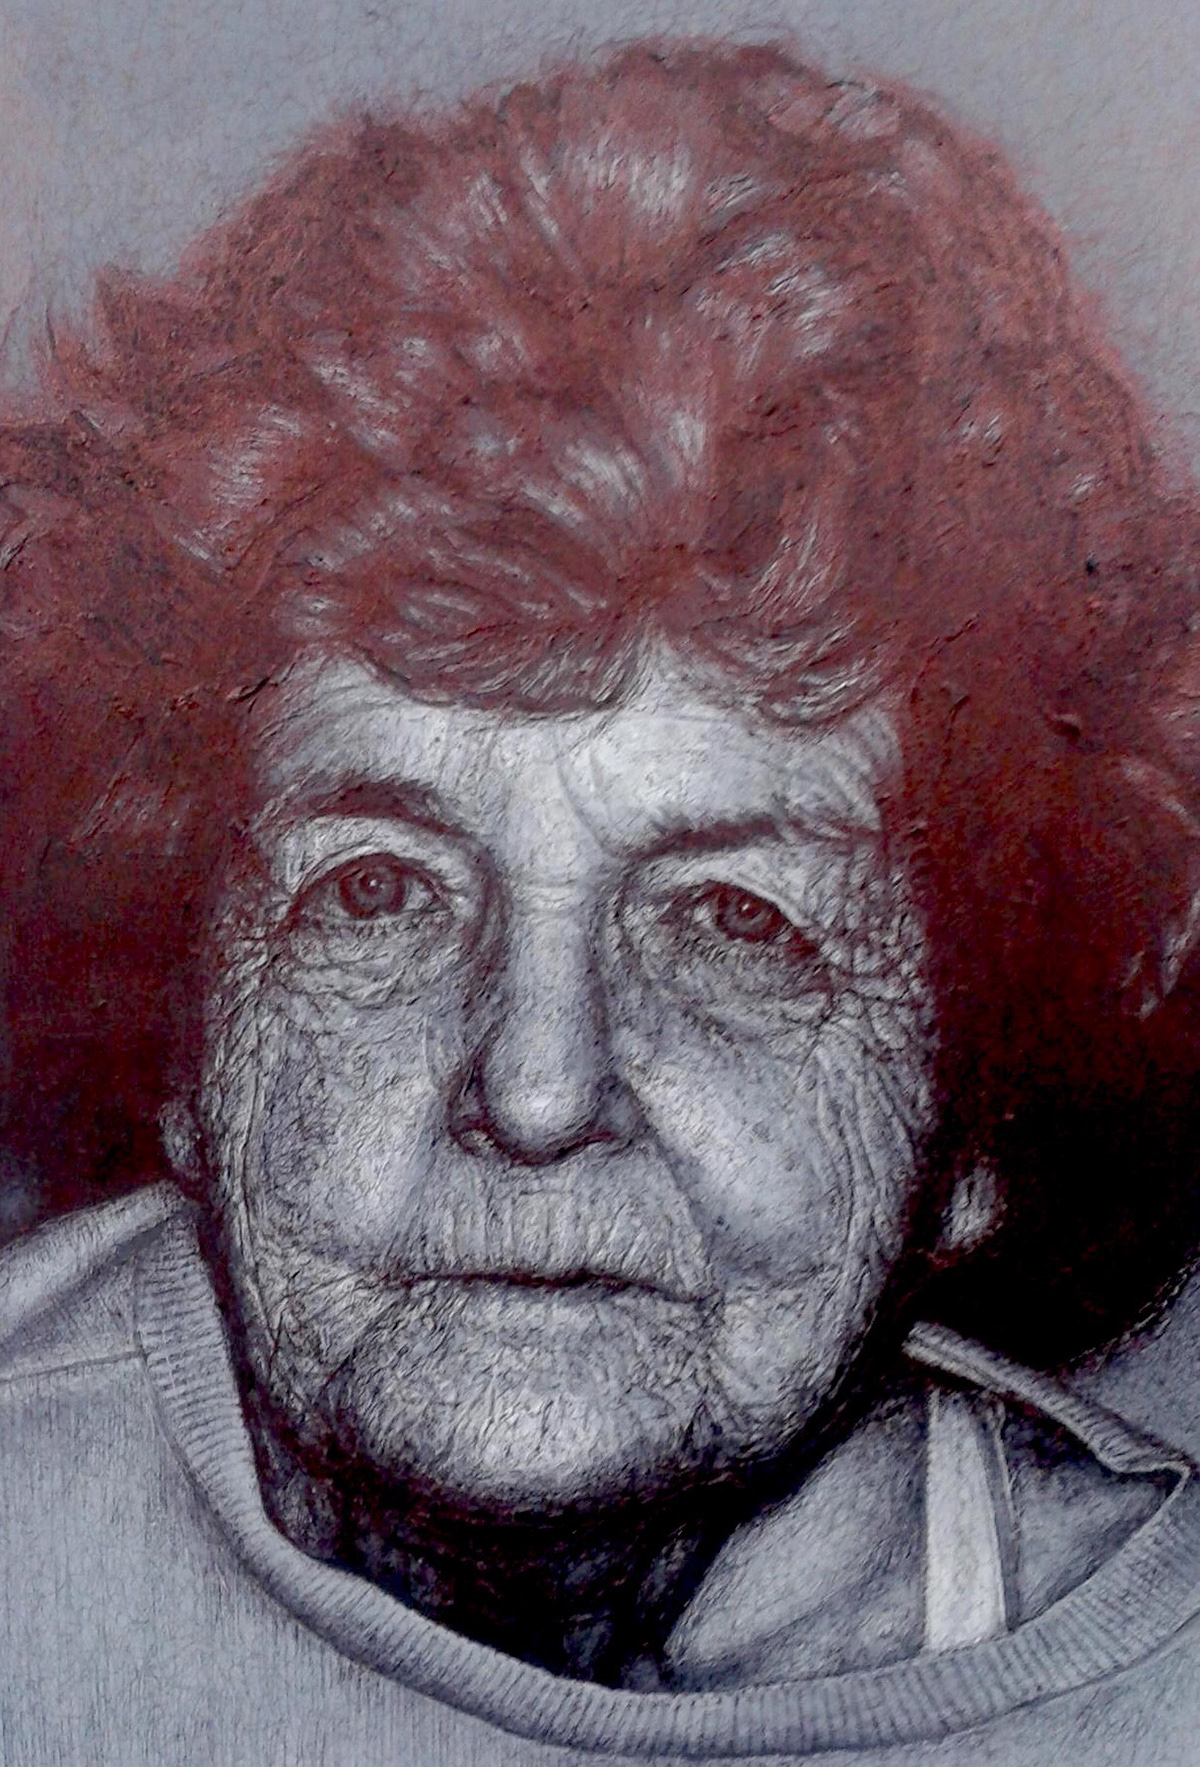 biro pen art Biro Art commission Portraiture grandma portrait old woman Wrinkles aging